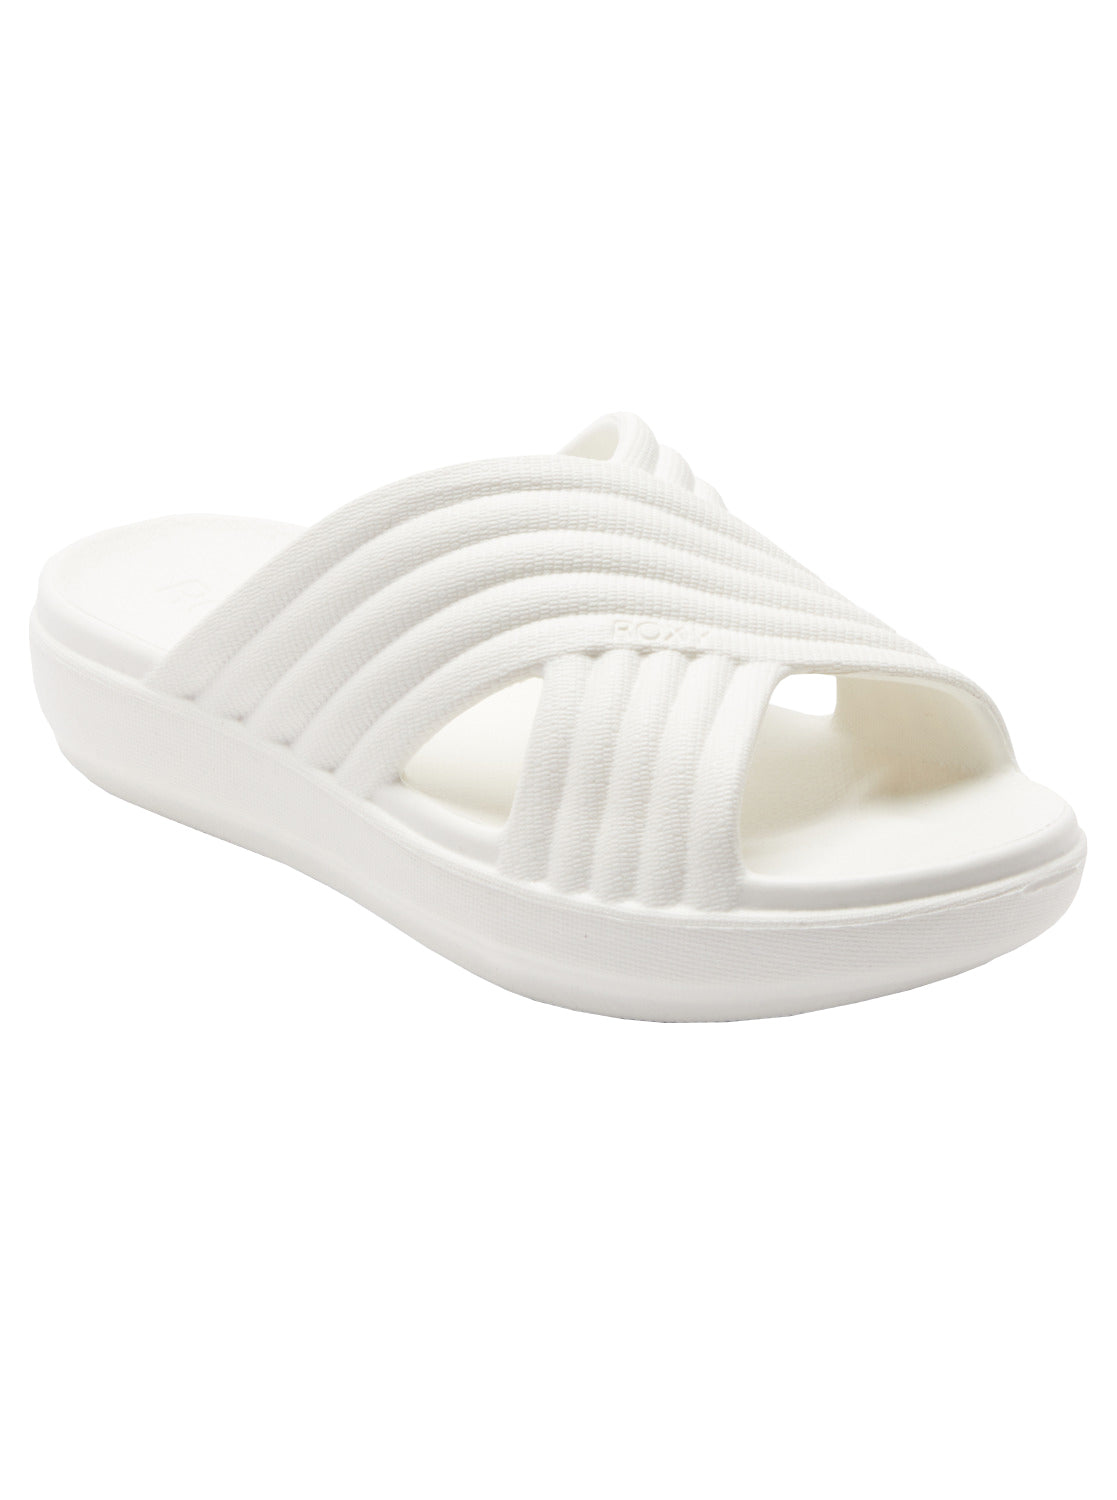 Roxy Rivie Womens Sandal WHT-White 9